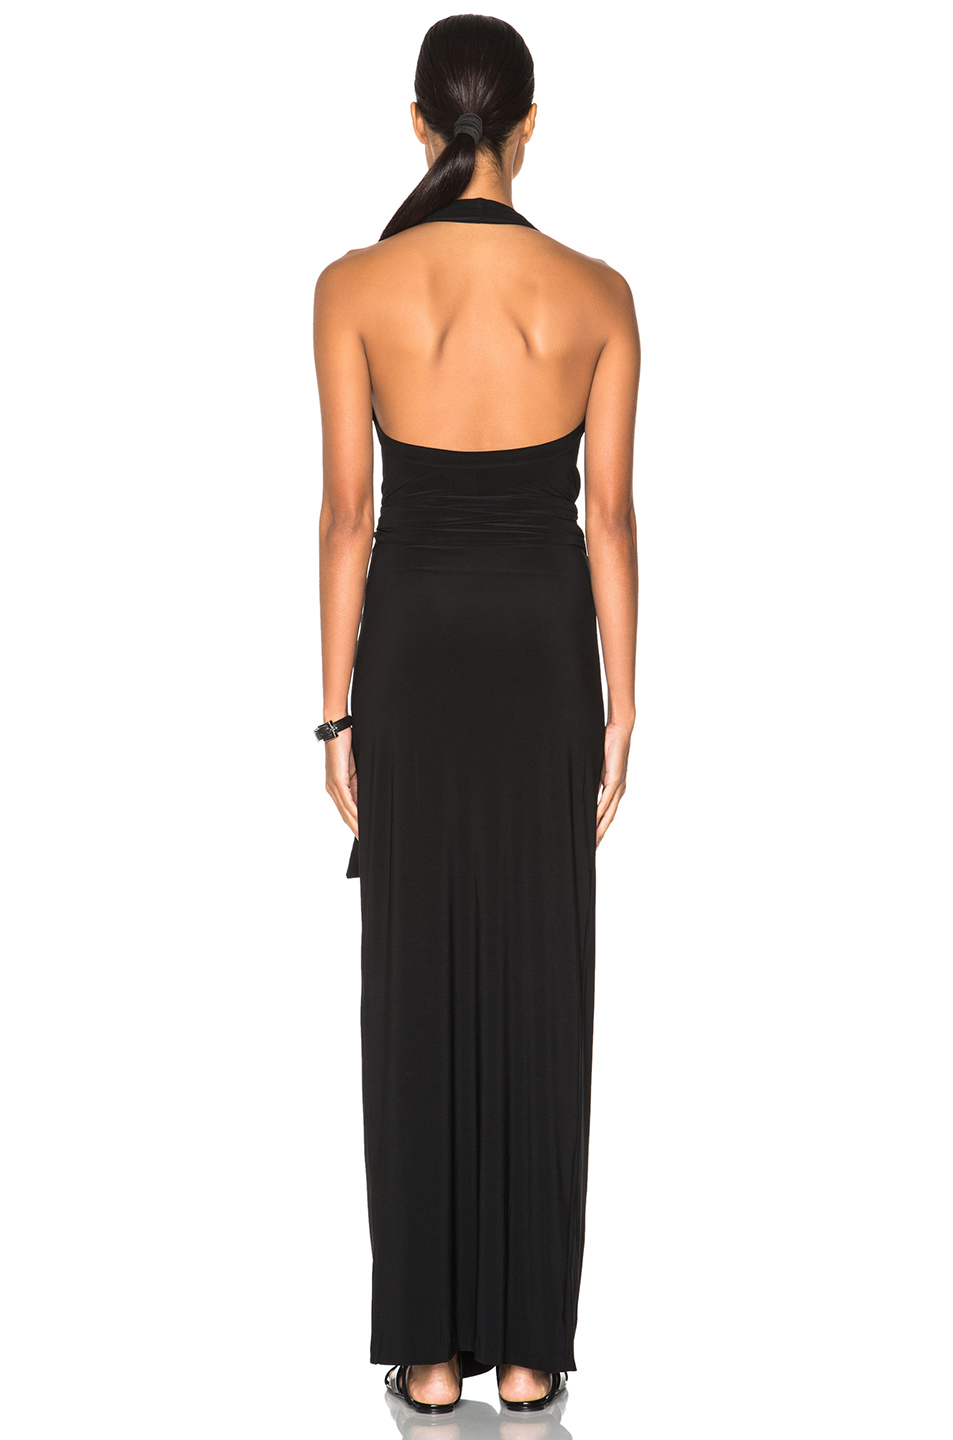 Norma Kamali Synthetic Halter Wrap Dress in Black - Lyst